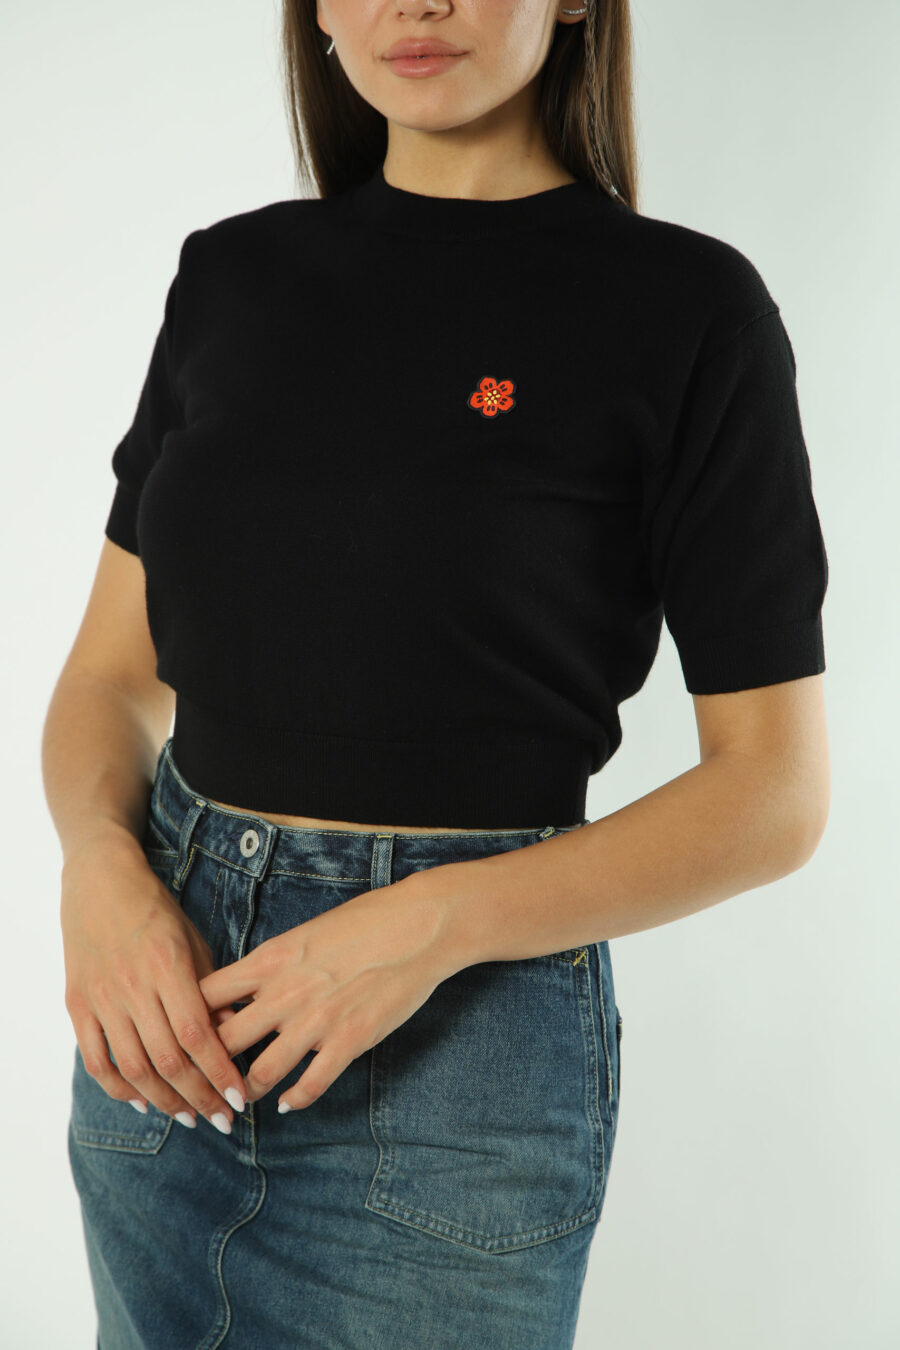 Black jumper with orange mini-logo - Photos 1295